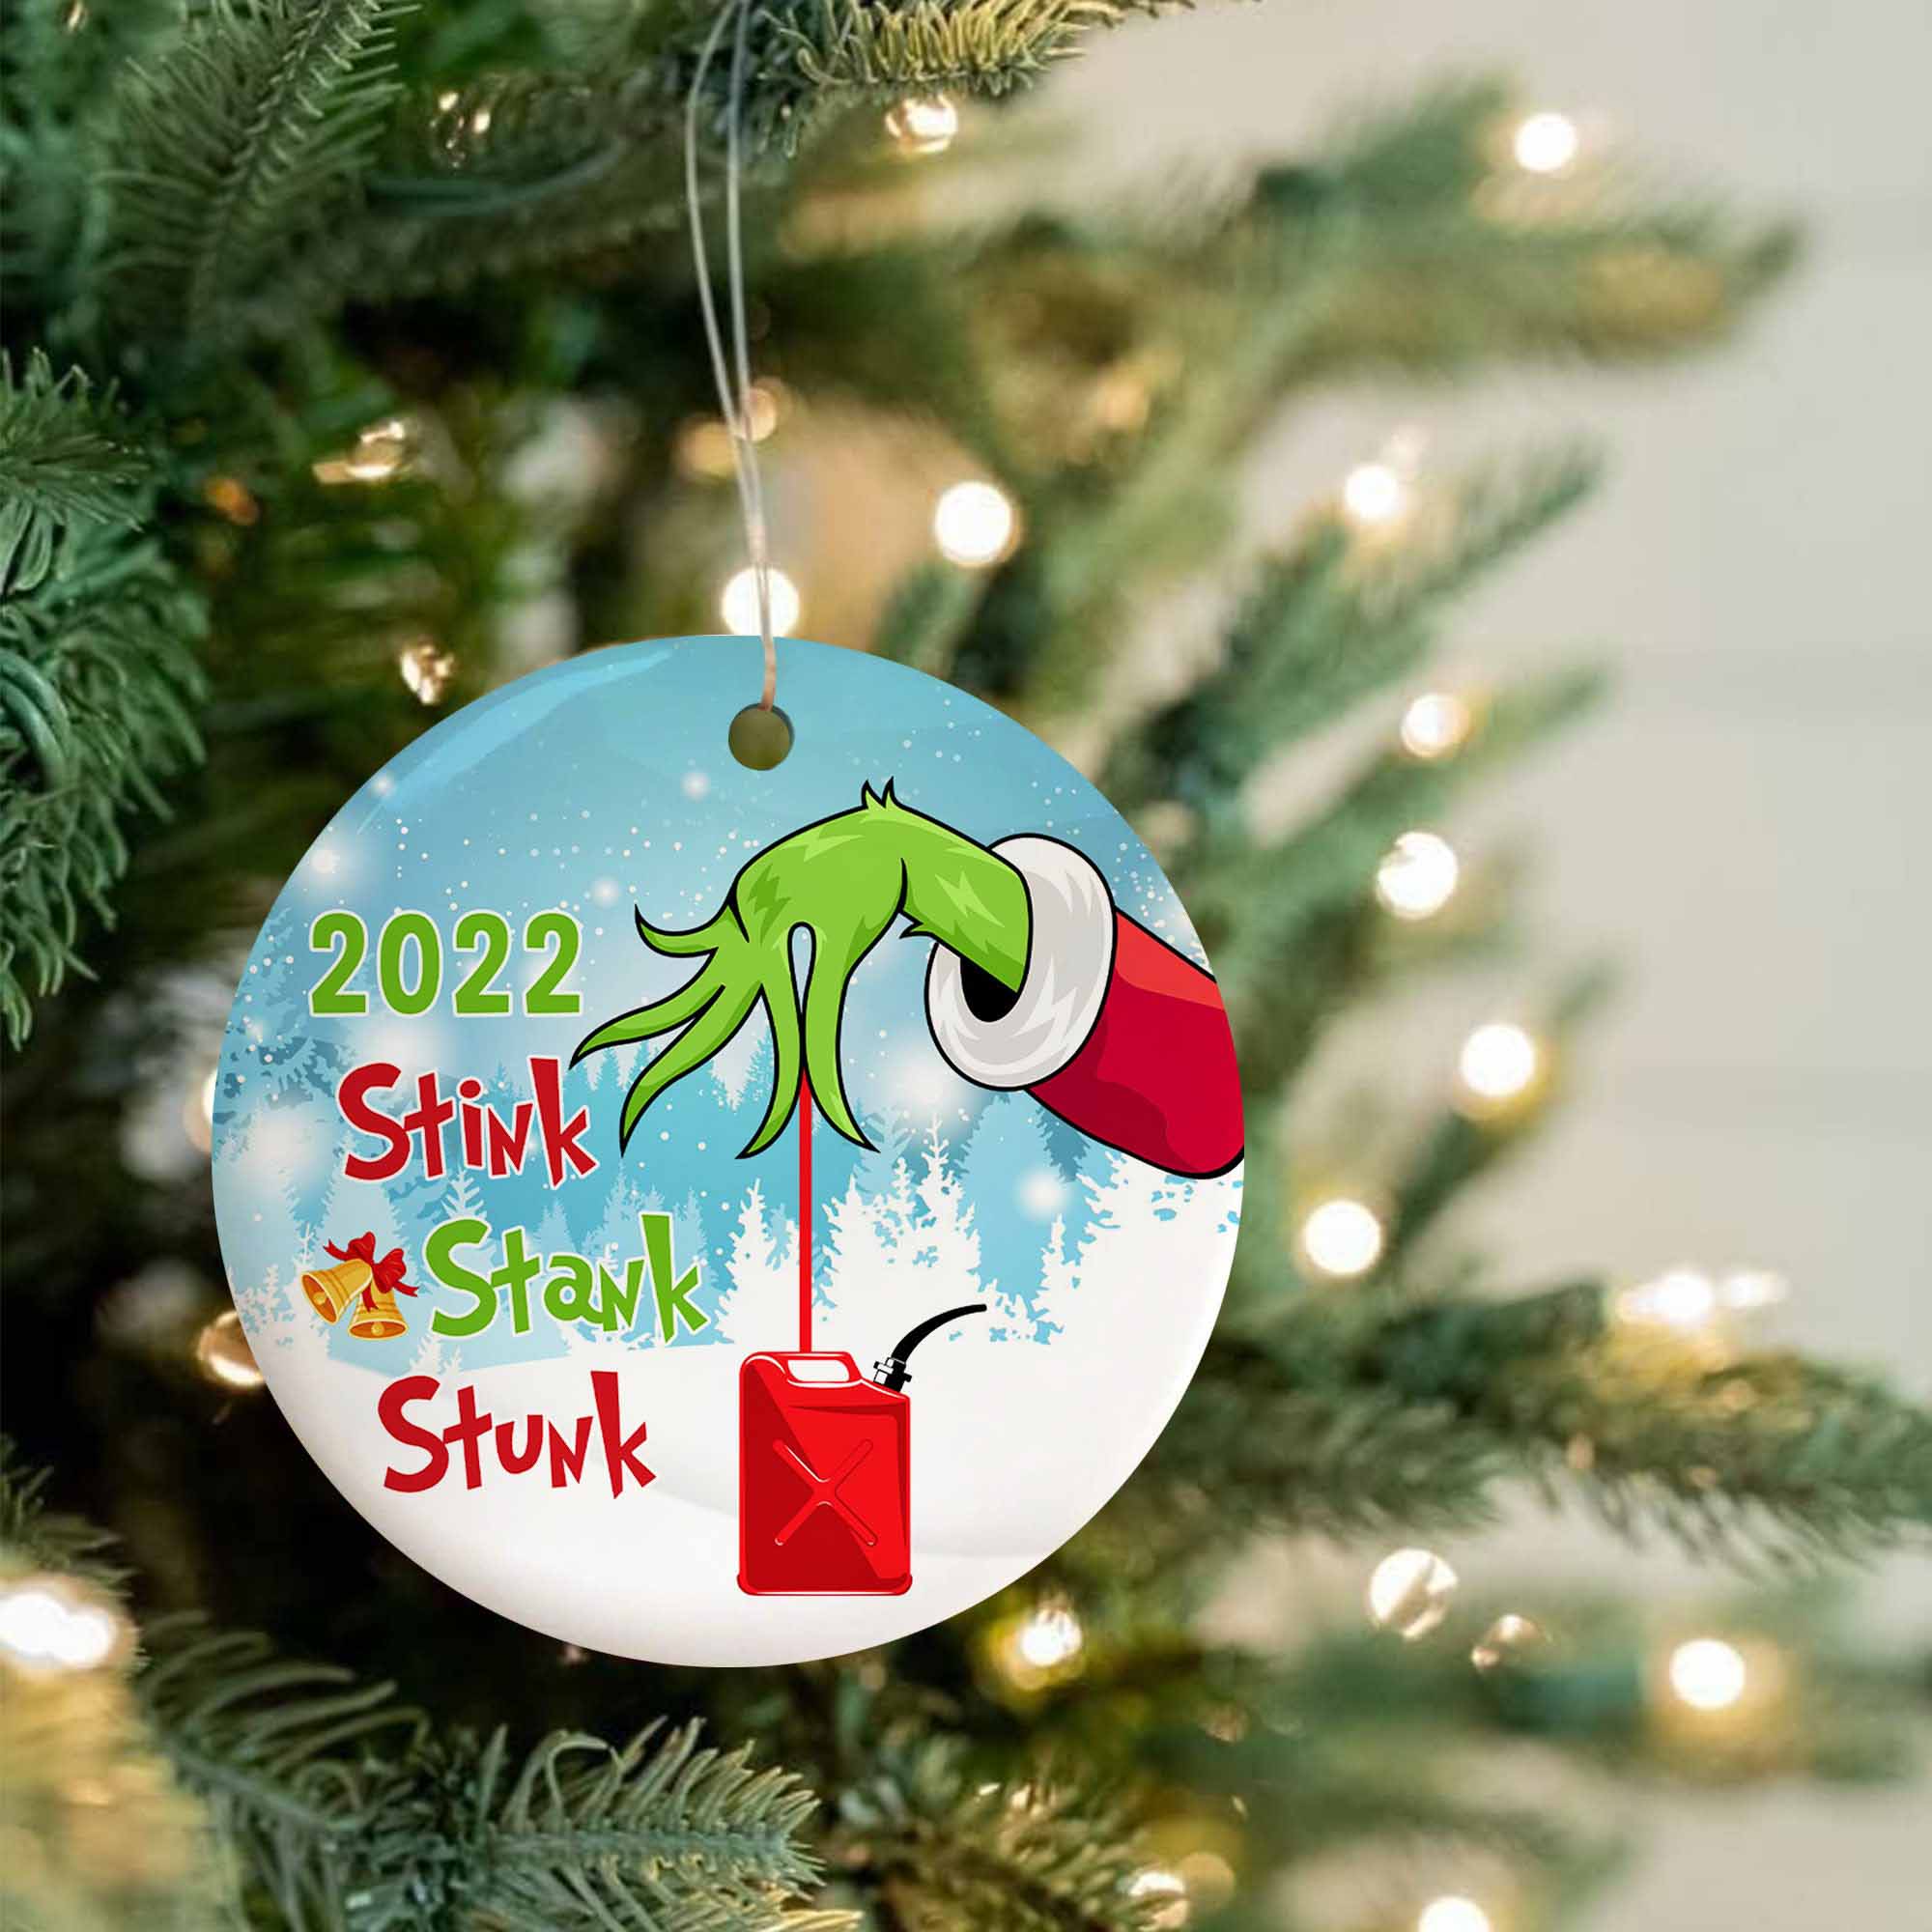 2022 Stink Stank Stunk Gasoline Inflation Gas Price Christmas Ornament Xmas Tree Decor